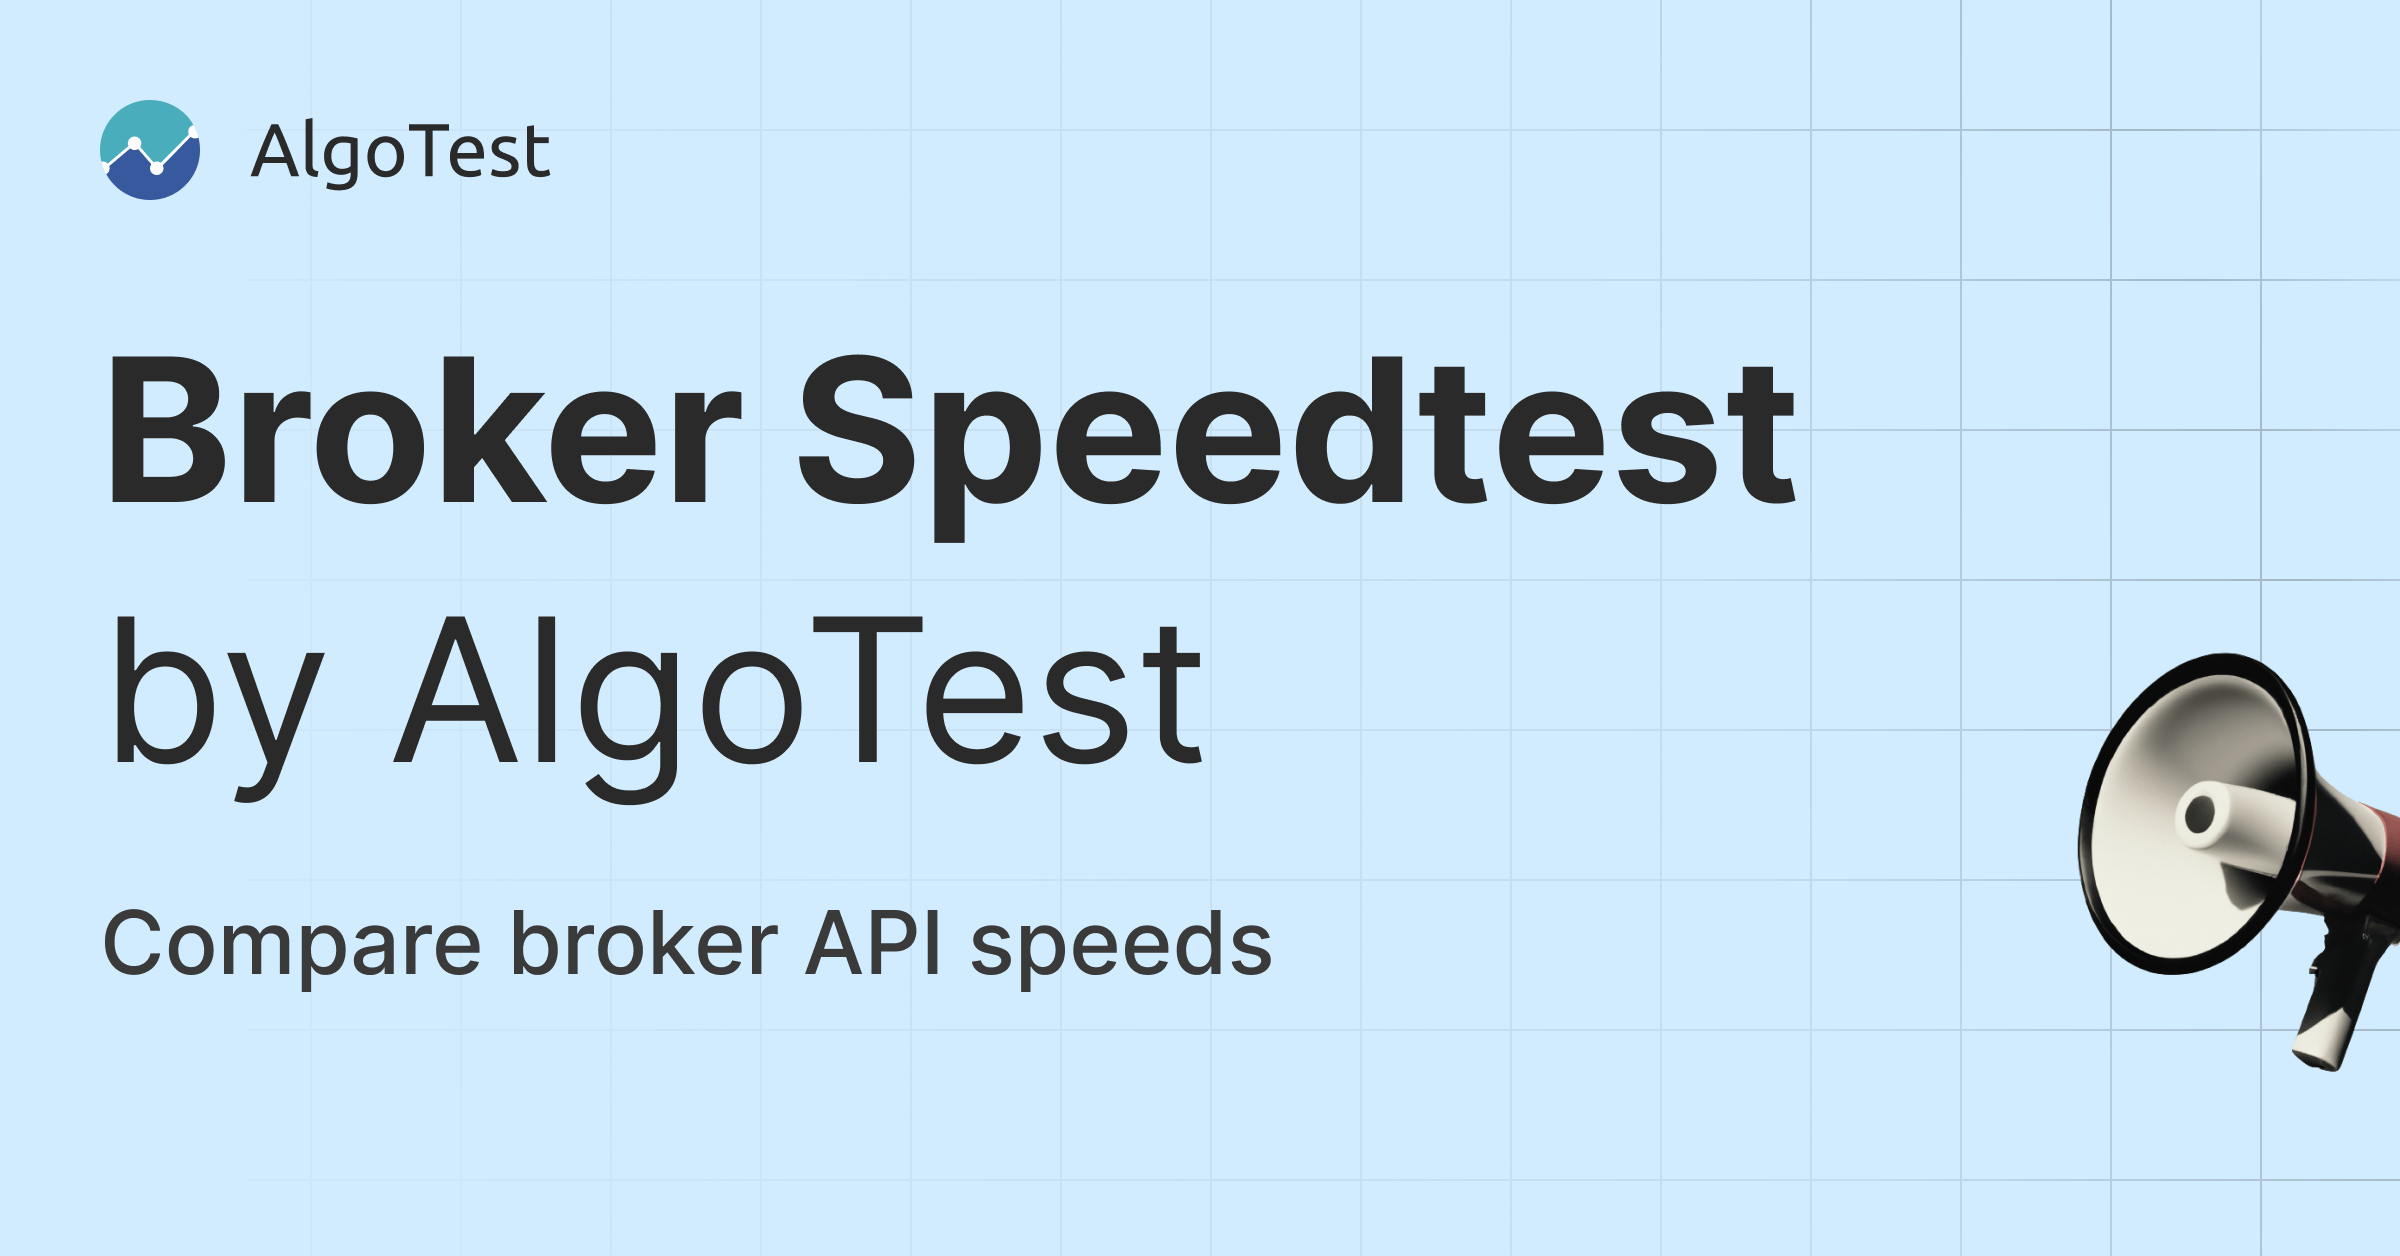 Broker API speedtest by AlgoTest